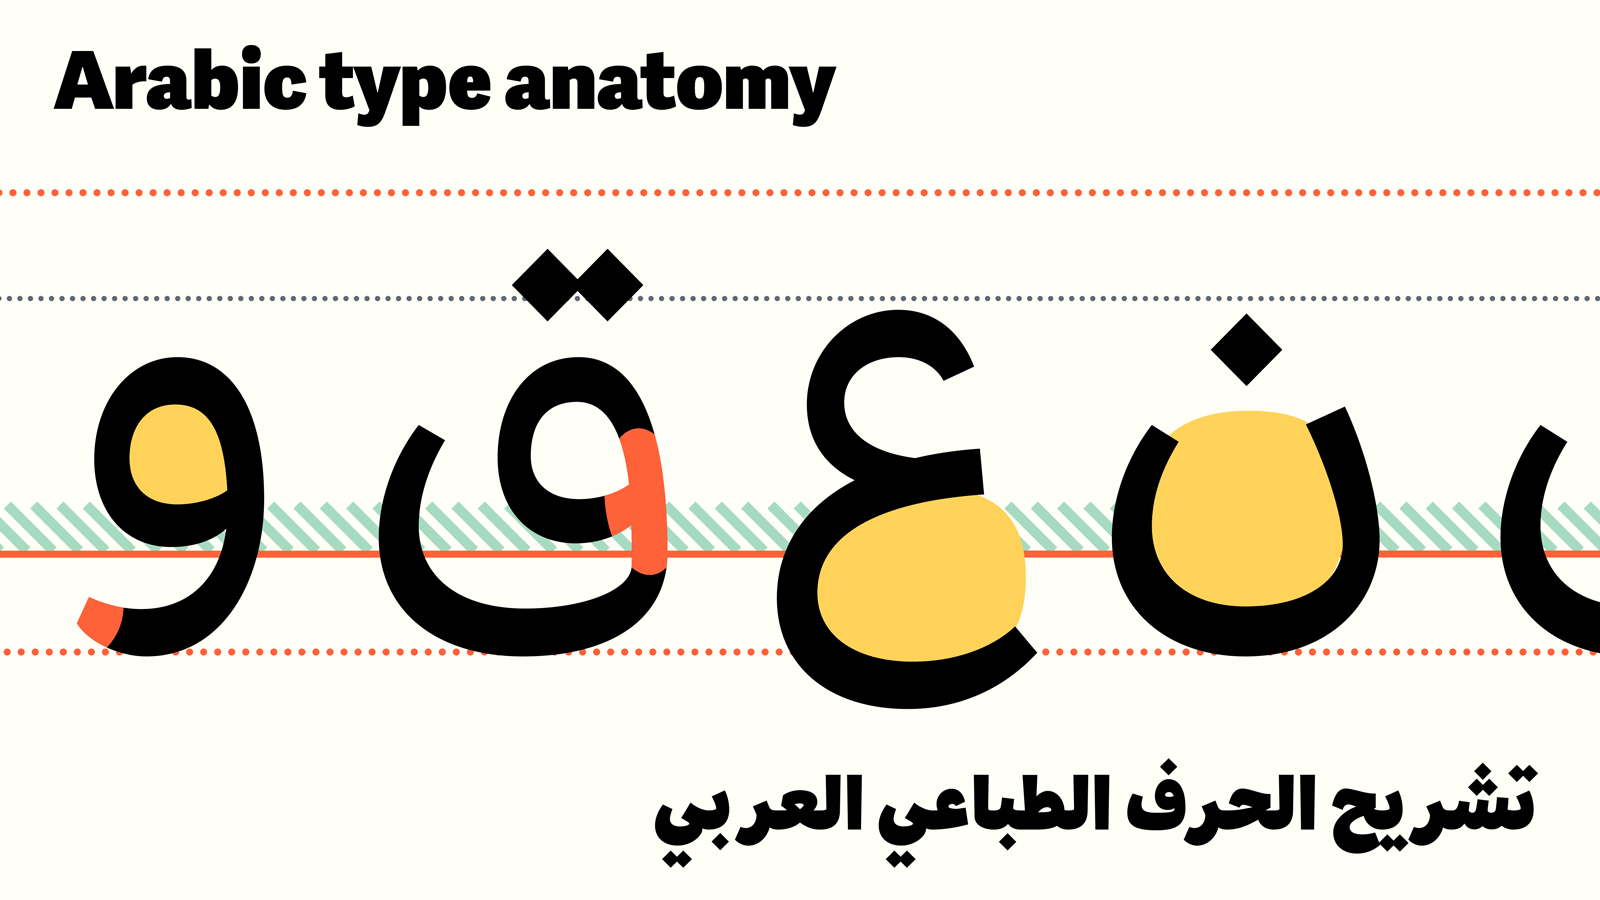 Anatomy of Type Arabic